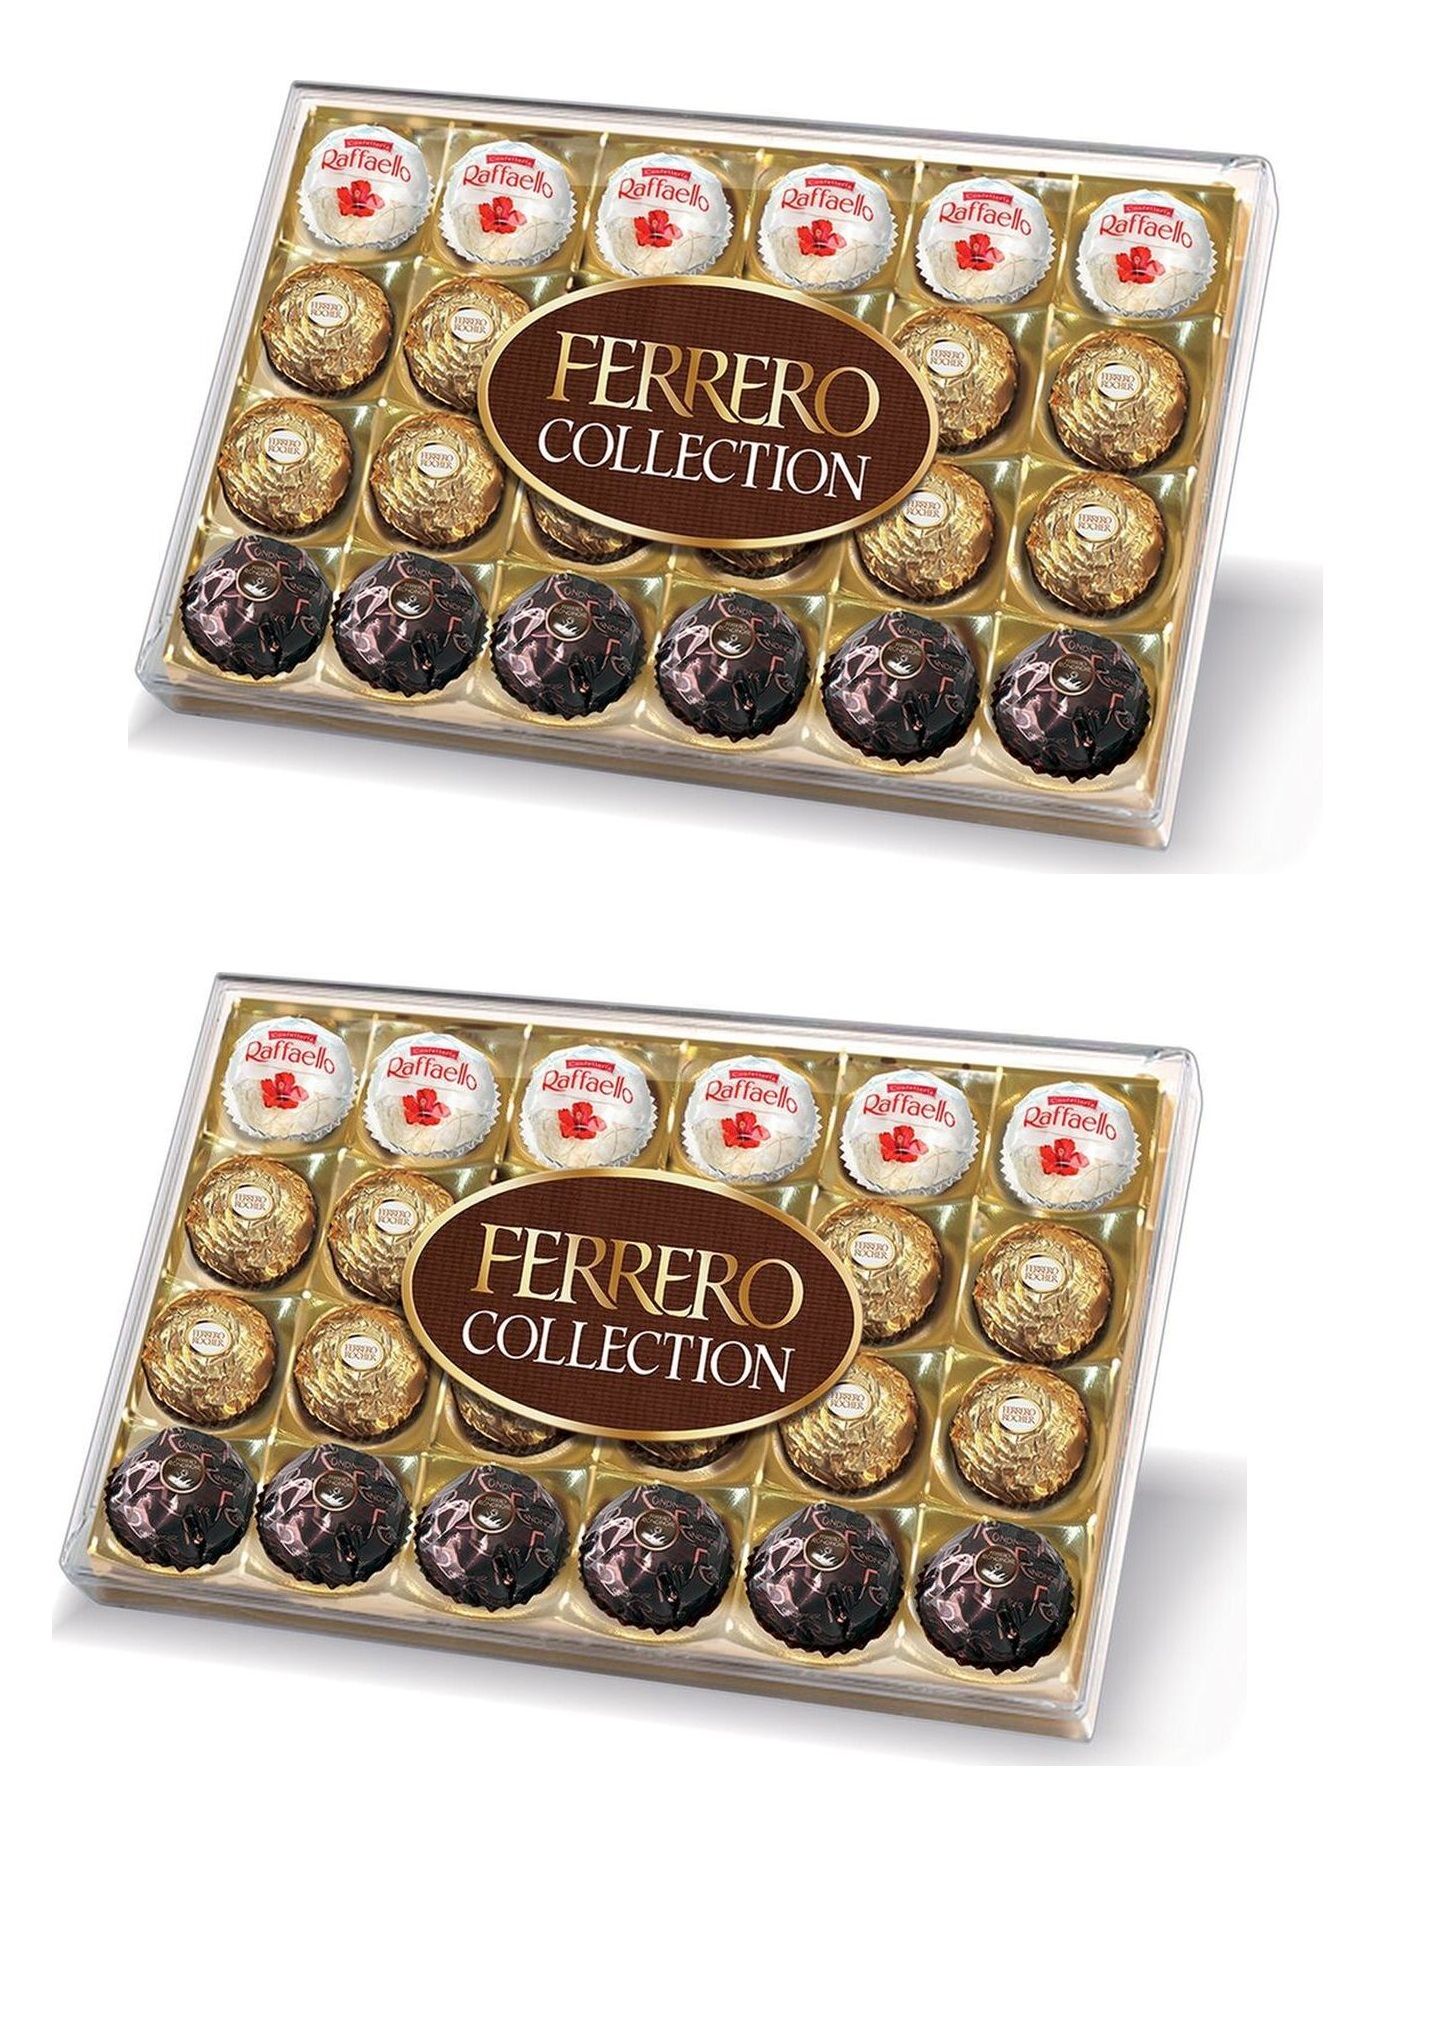 Collection t me. Конфеты Ferrero collection ассорти. Набор конфет Ferrero Rocher collection 269 г. Ferrero Rocher ассорти collection 269 г. Набор конфет Ферреро коллекшн.